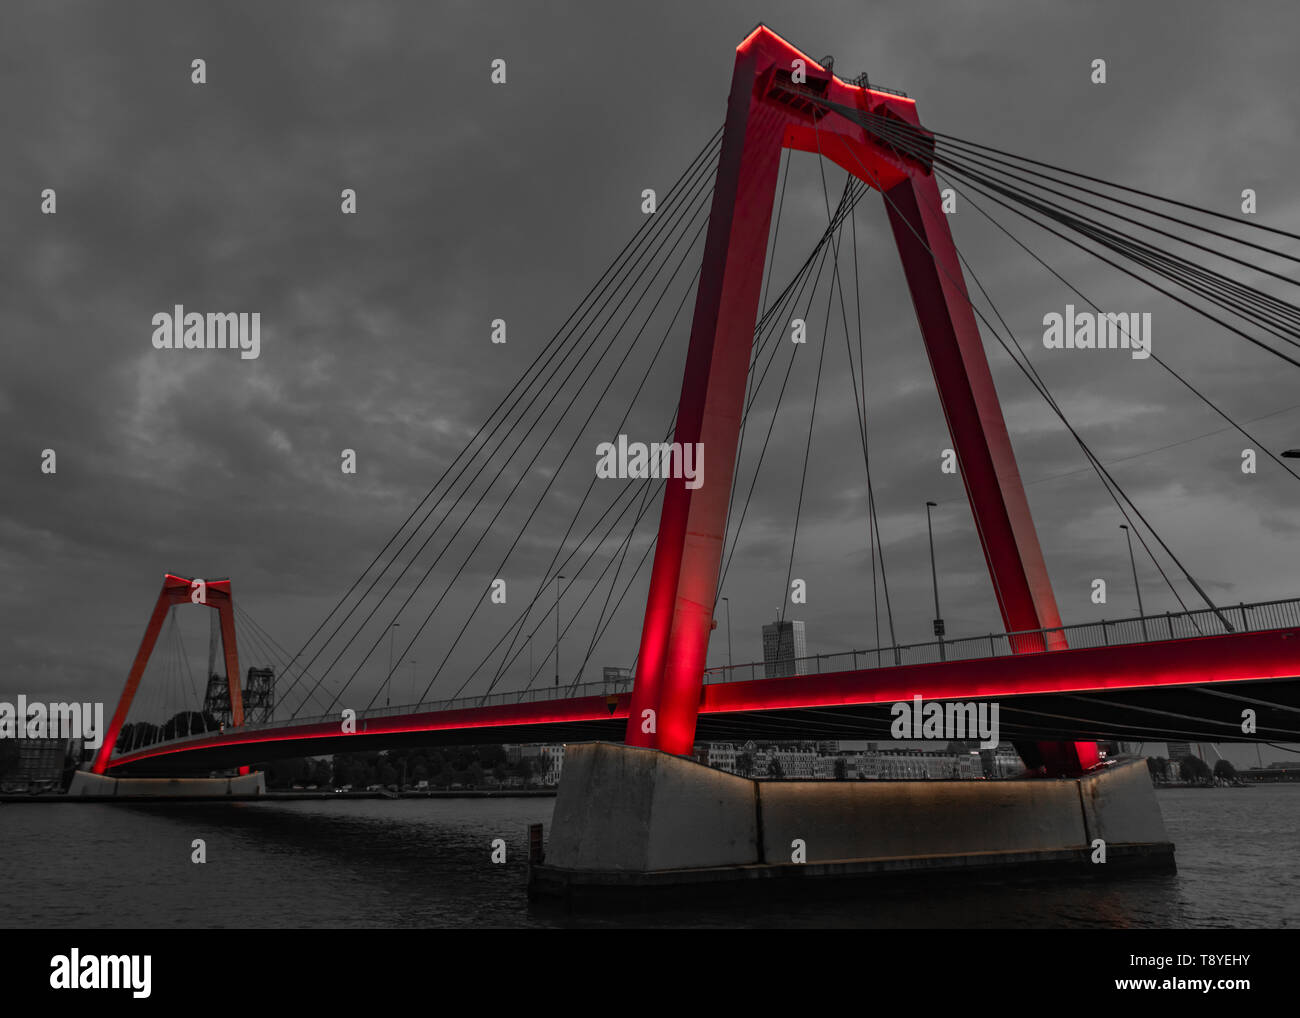 Willemsbrug bridge Rotterdam - cable-stayed bridge by C. Veerling - red bridge Rotterdam over the Nieuwe Maas river Stock Photo